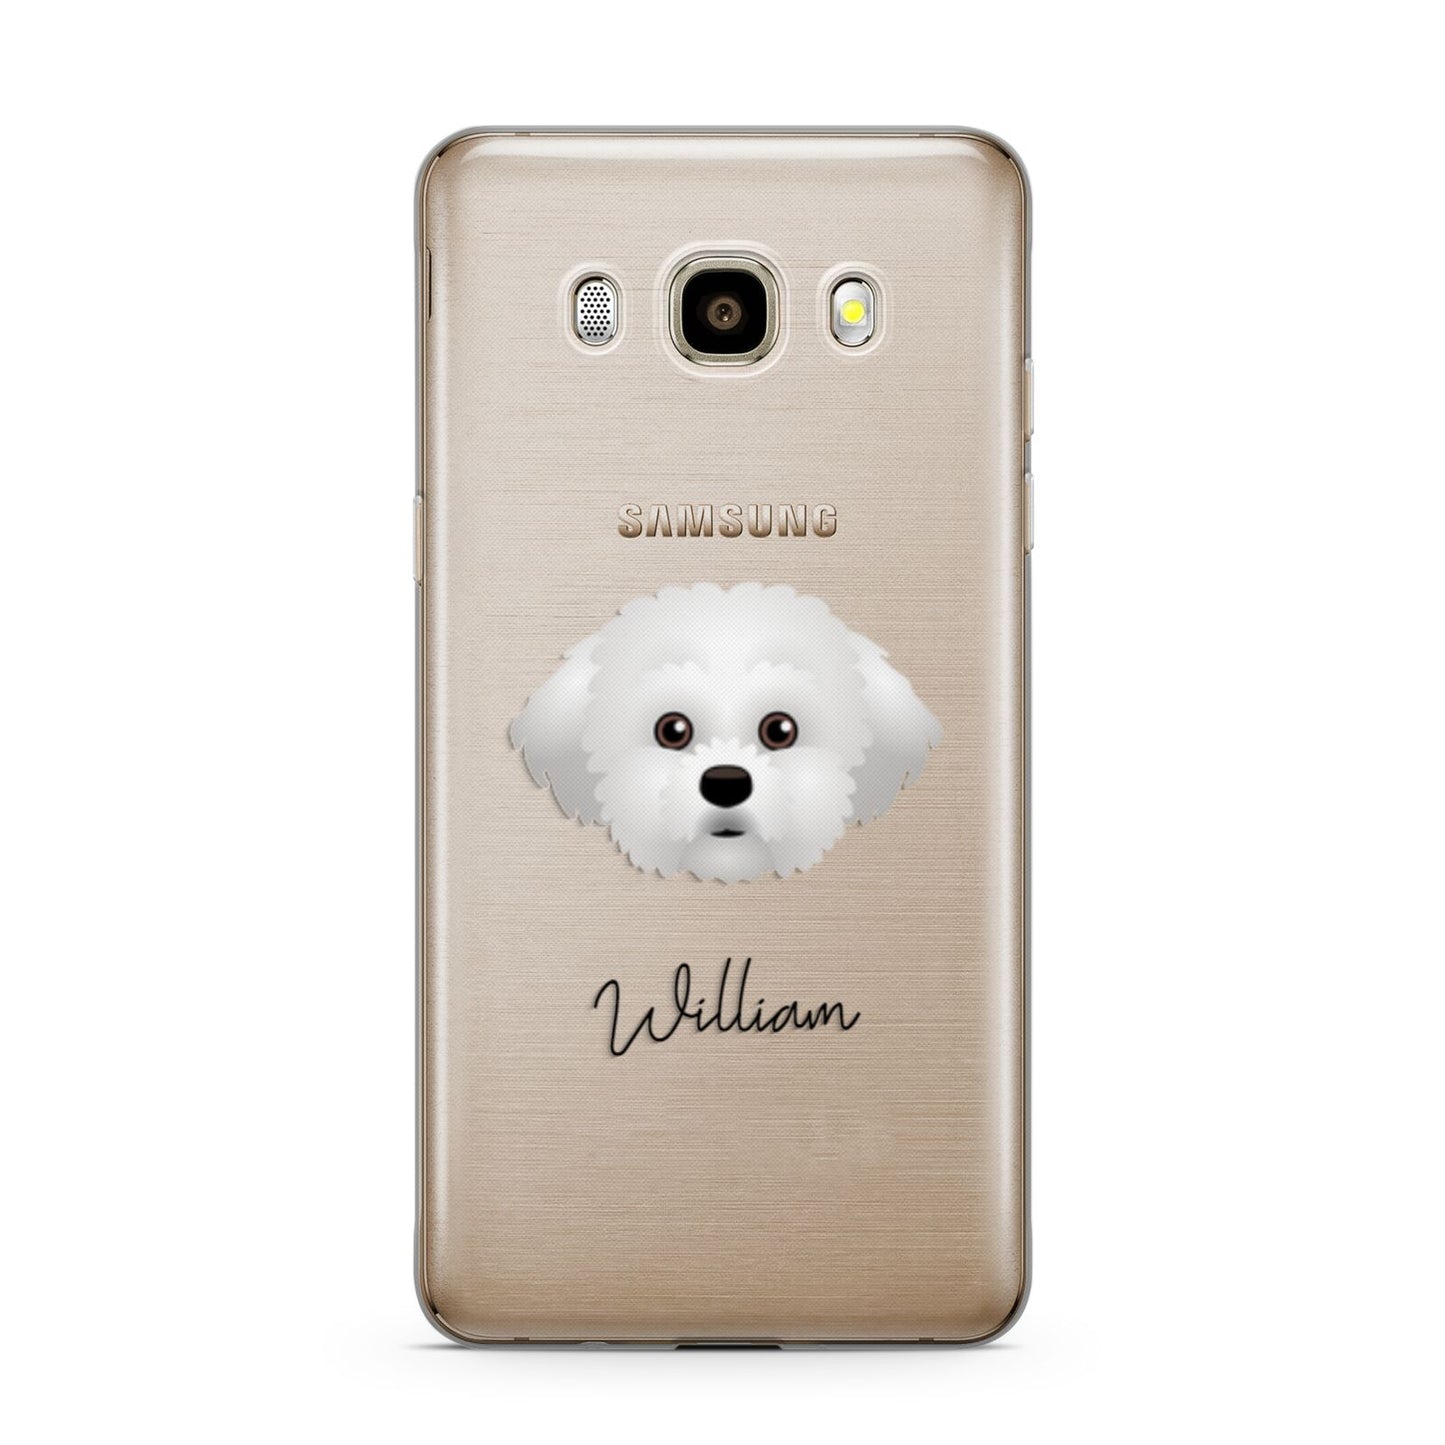 Maltichon Personalised Samsung Galaxy J7 2016 Case on gold phone